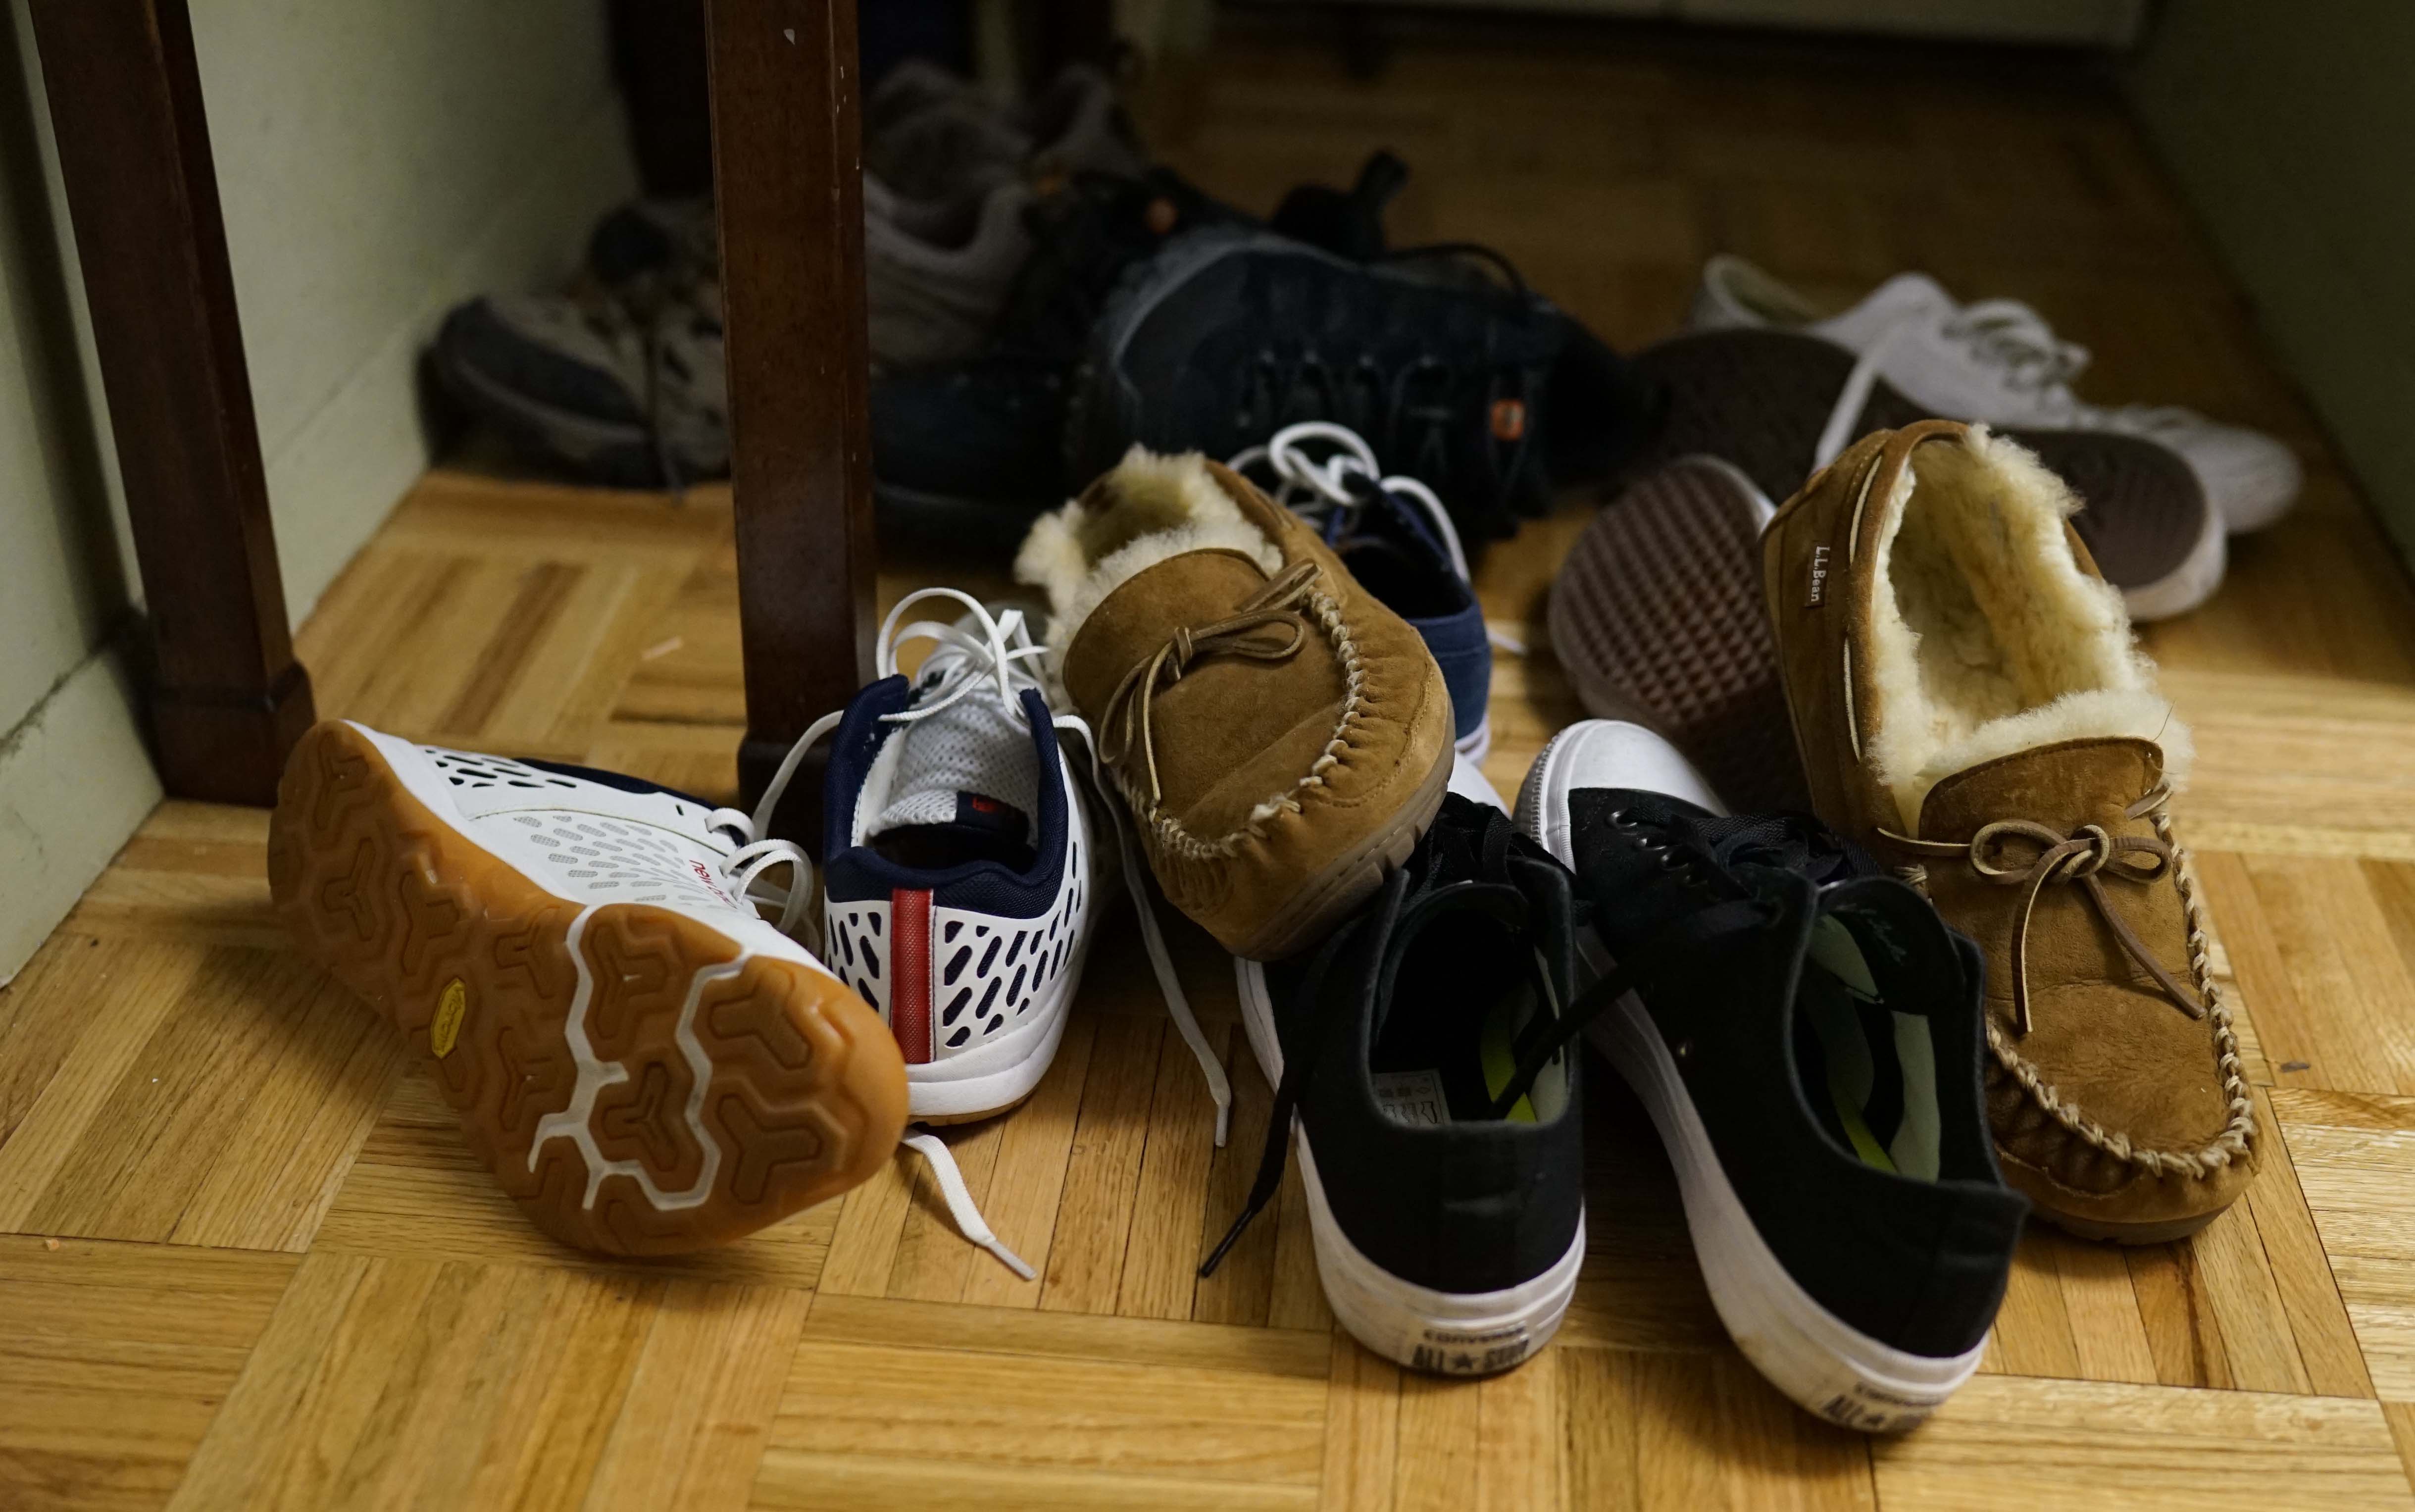 Shoe pile